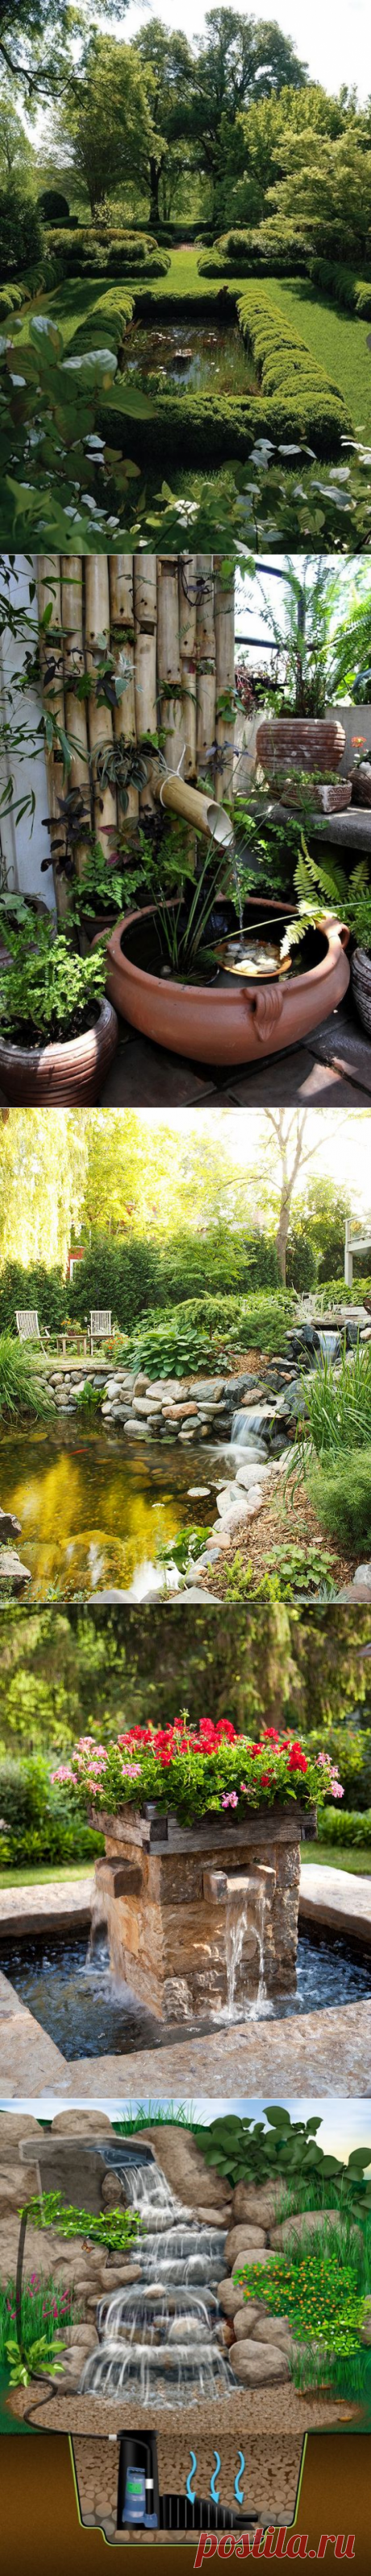 Сады с водоемом, фонтаном и водопадом